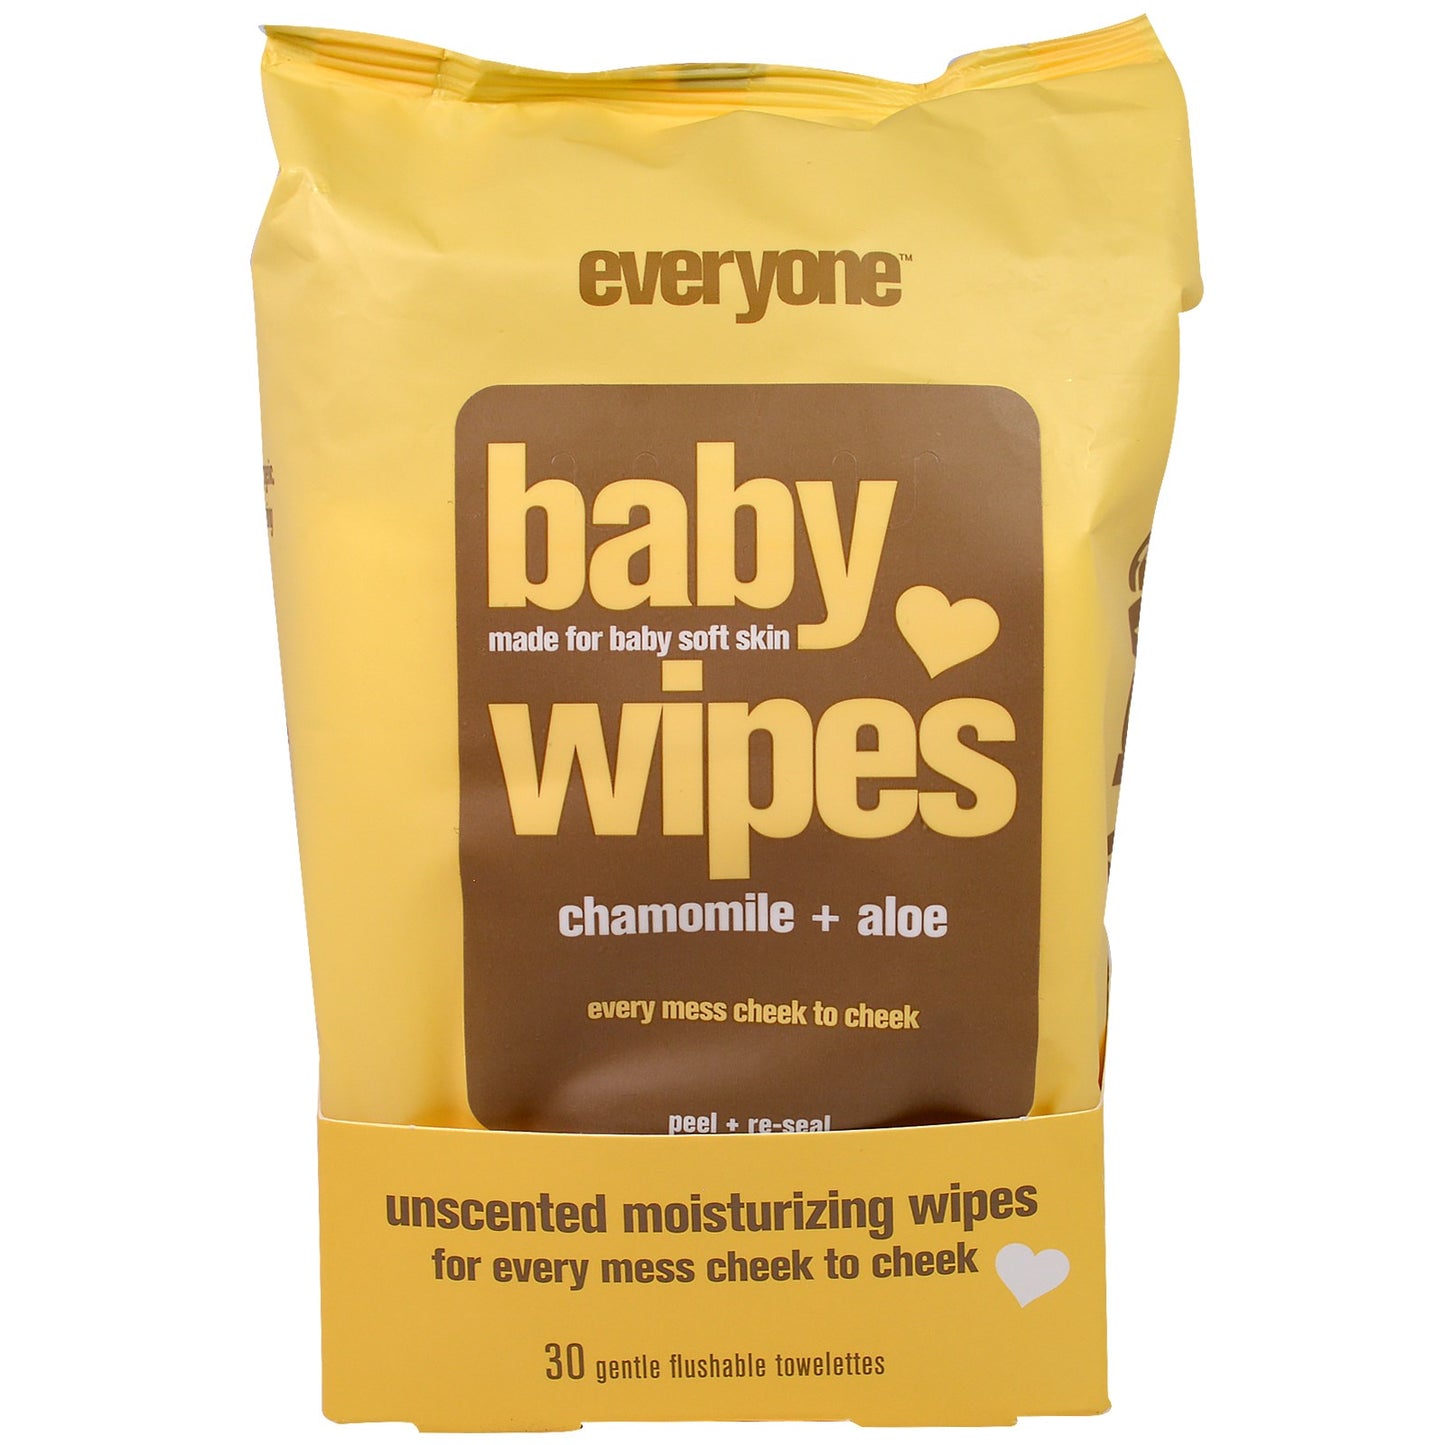 Everyone, Baby Wipes, Chamomile Plus Aloe, 30 Gentle Flushable Towelettes